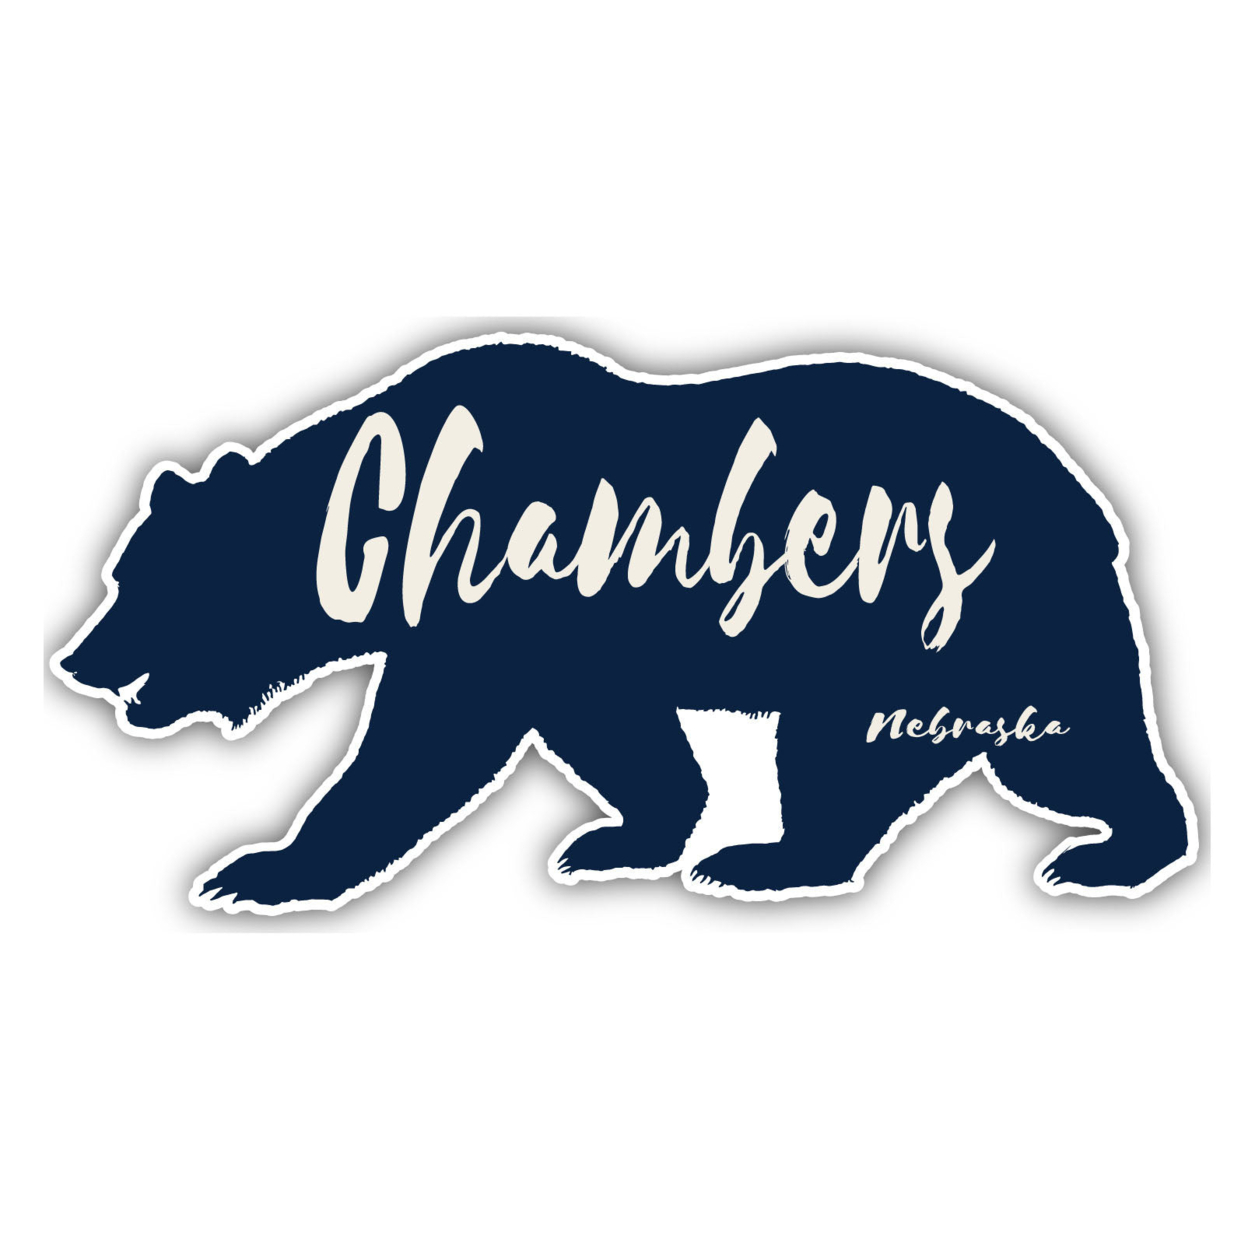 Chambers Nebraska Souvenir Decorative Stickers (Choose Theme And Size) - 4-Pack, 8-Inch, Bear